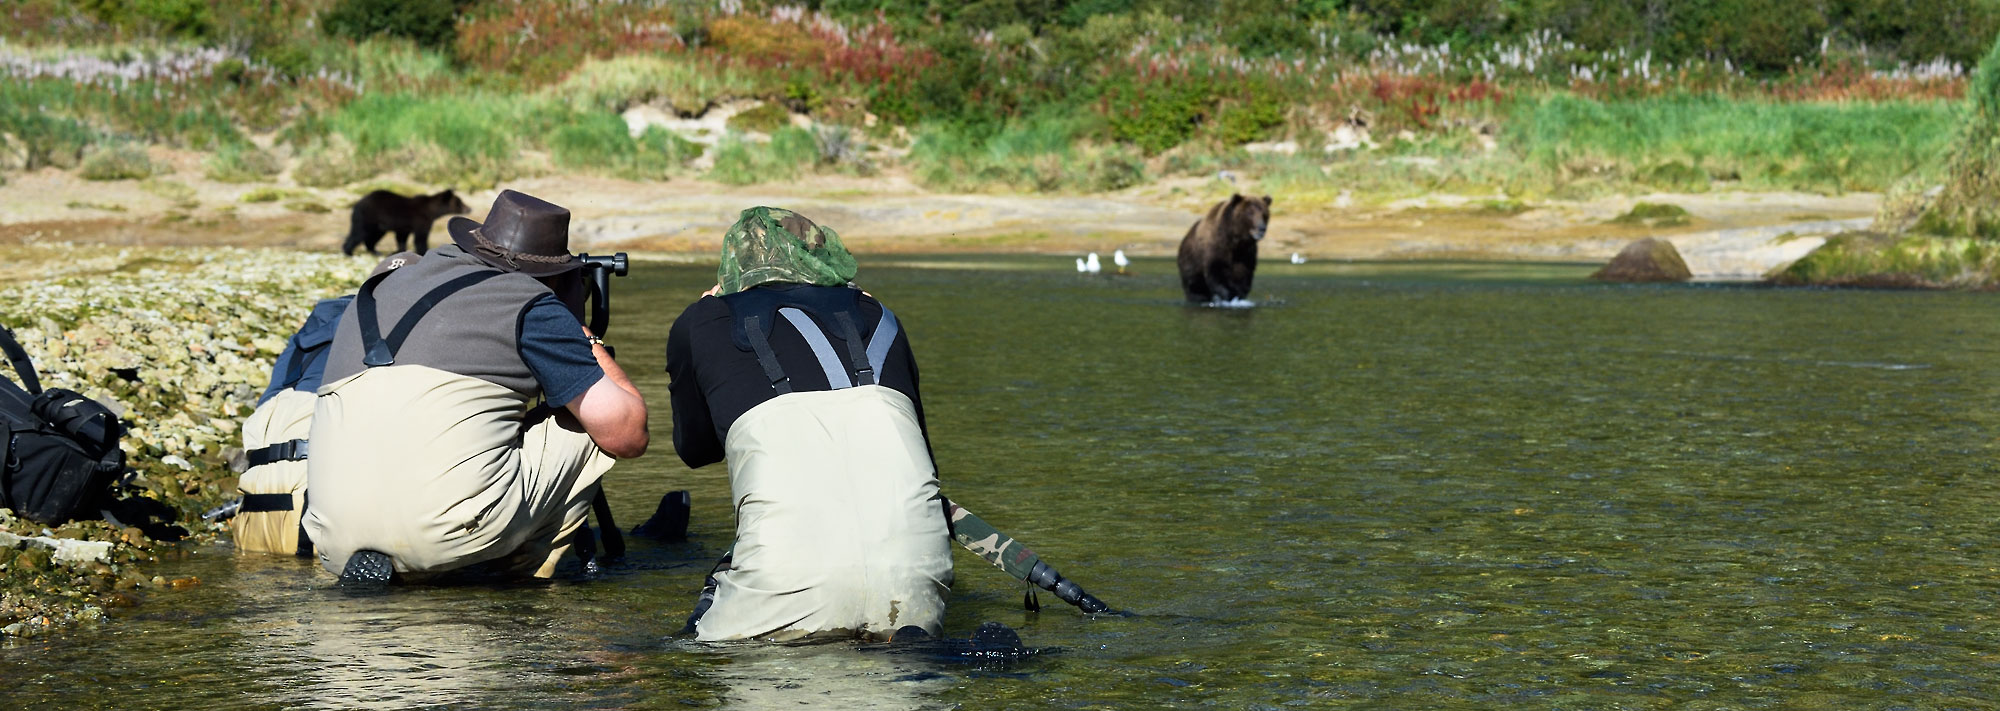 photographing brown bears Katmai Alaska.